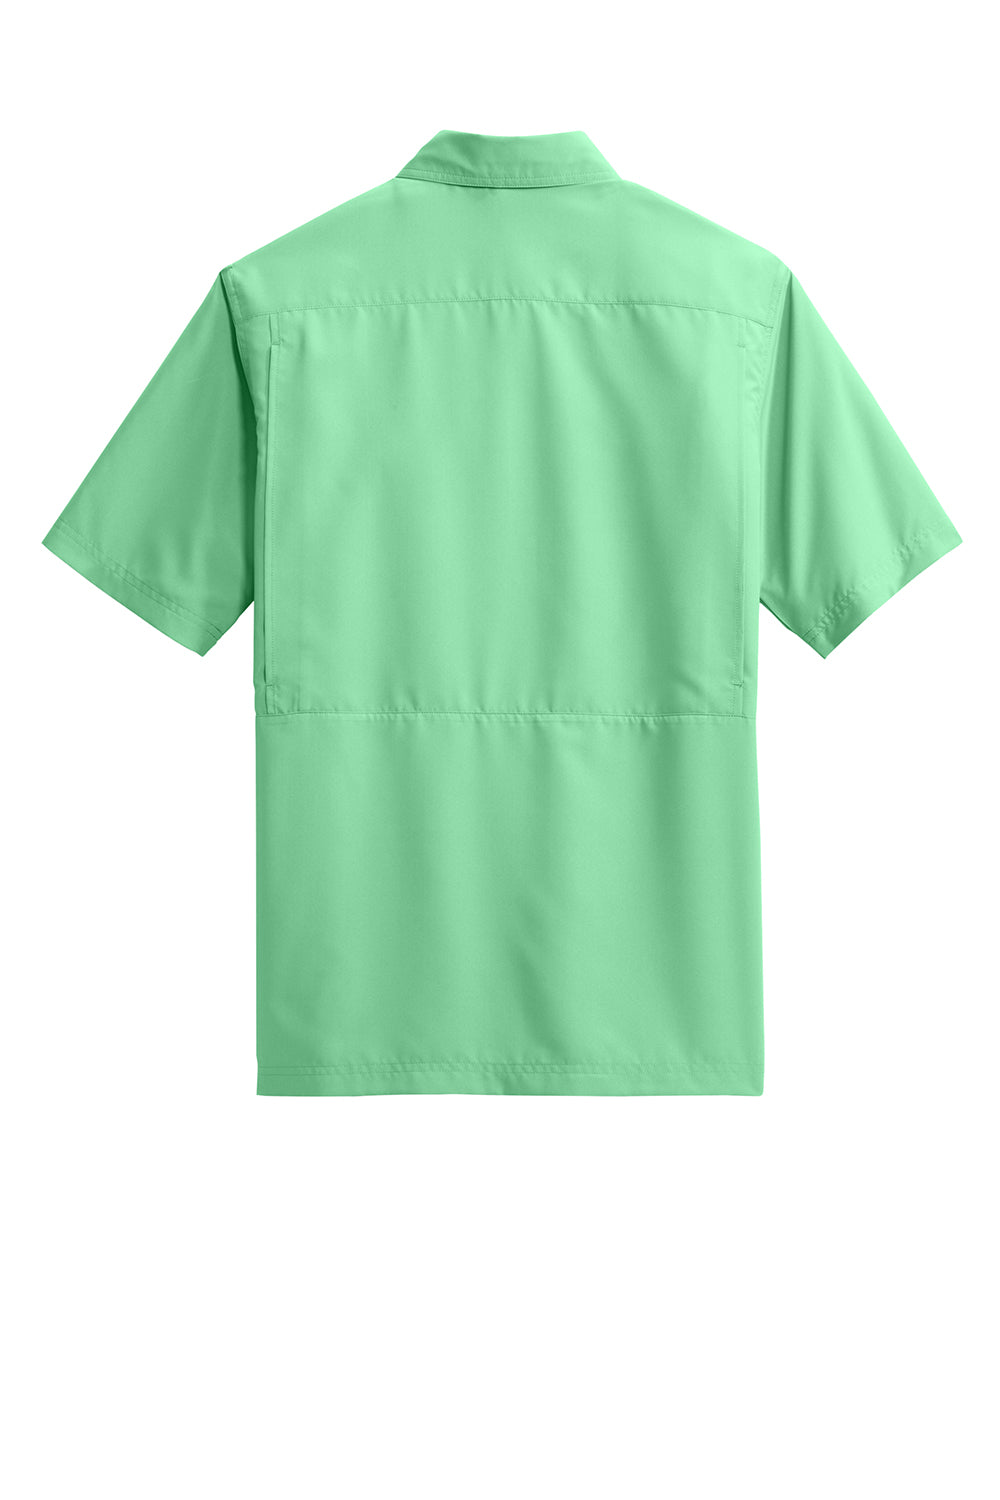 Port Authority W961 Mens Daybreak Moisture Wicking Short Sleeve Button Down Shirt w/ Double Pockets Bright Seafoam Green Flat Back